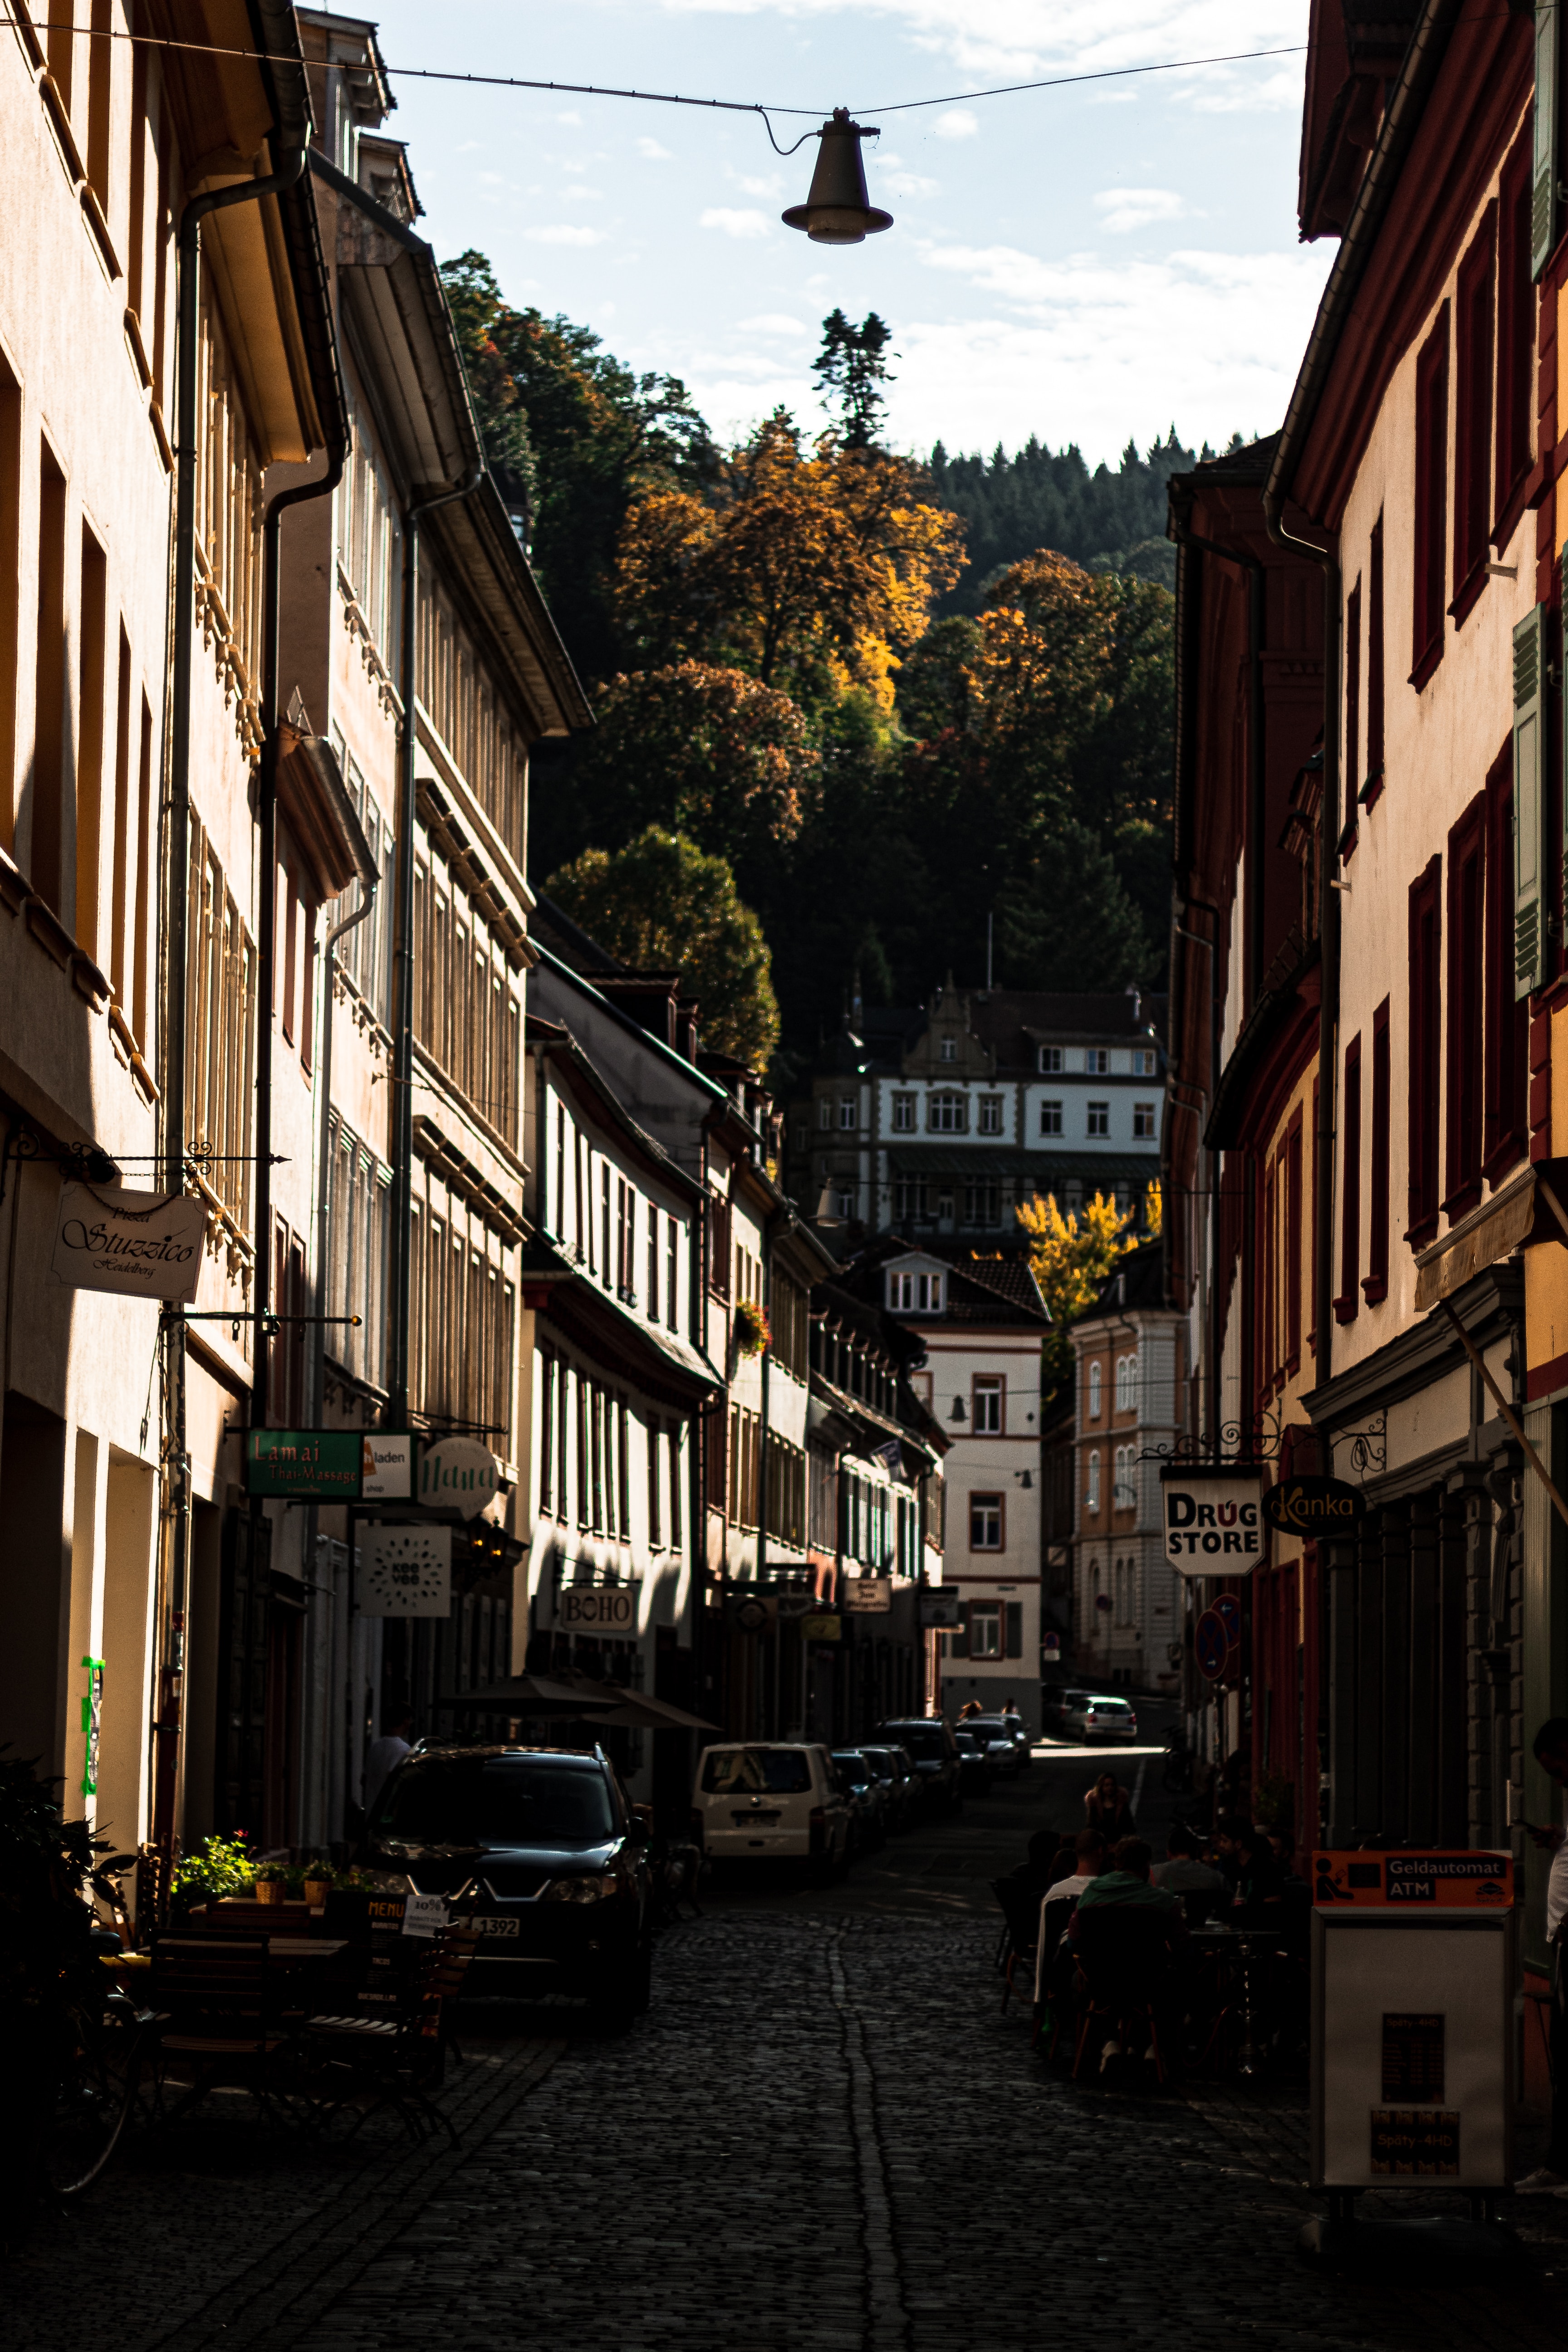 Visit Heidelberg Tun – Largest wine barrel in the world